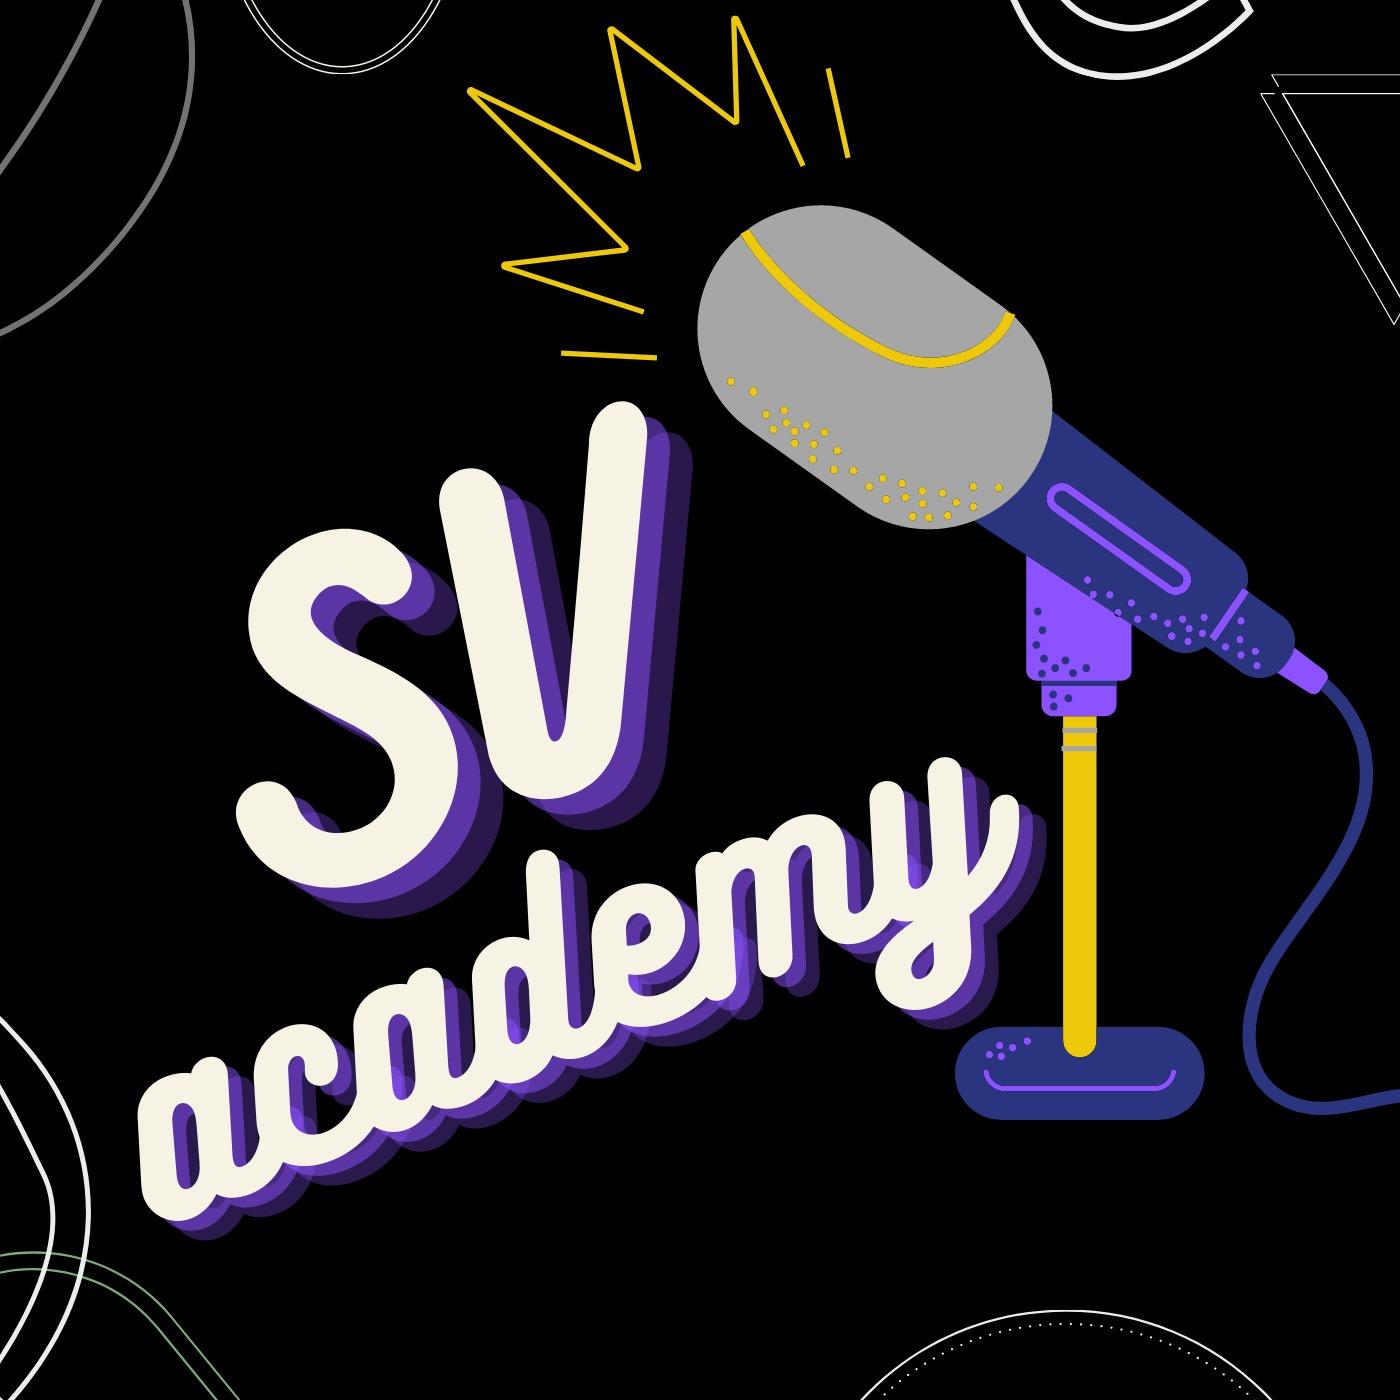 SV Academy